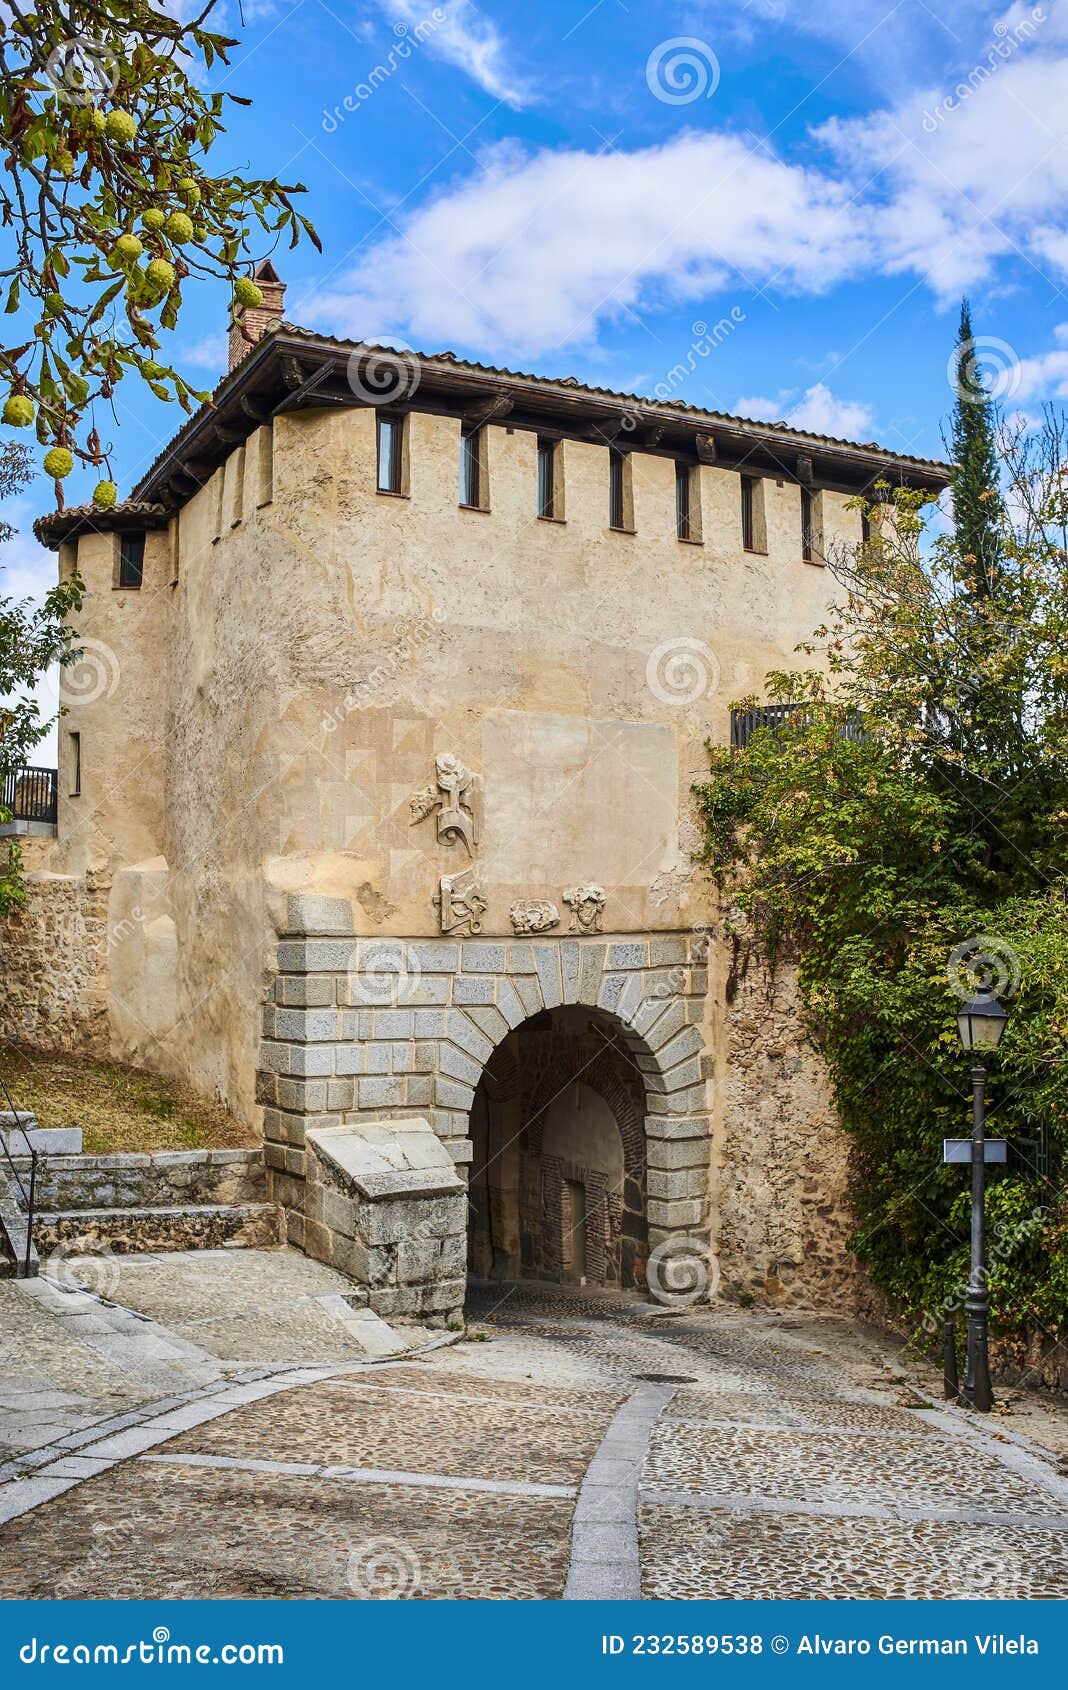 puerta de santiago gate. segovia, castile and leon, spain